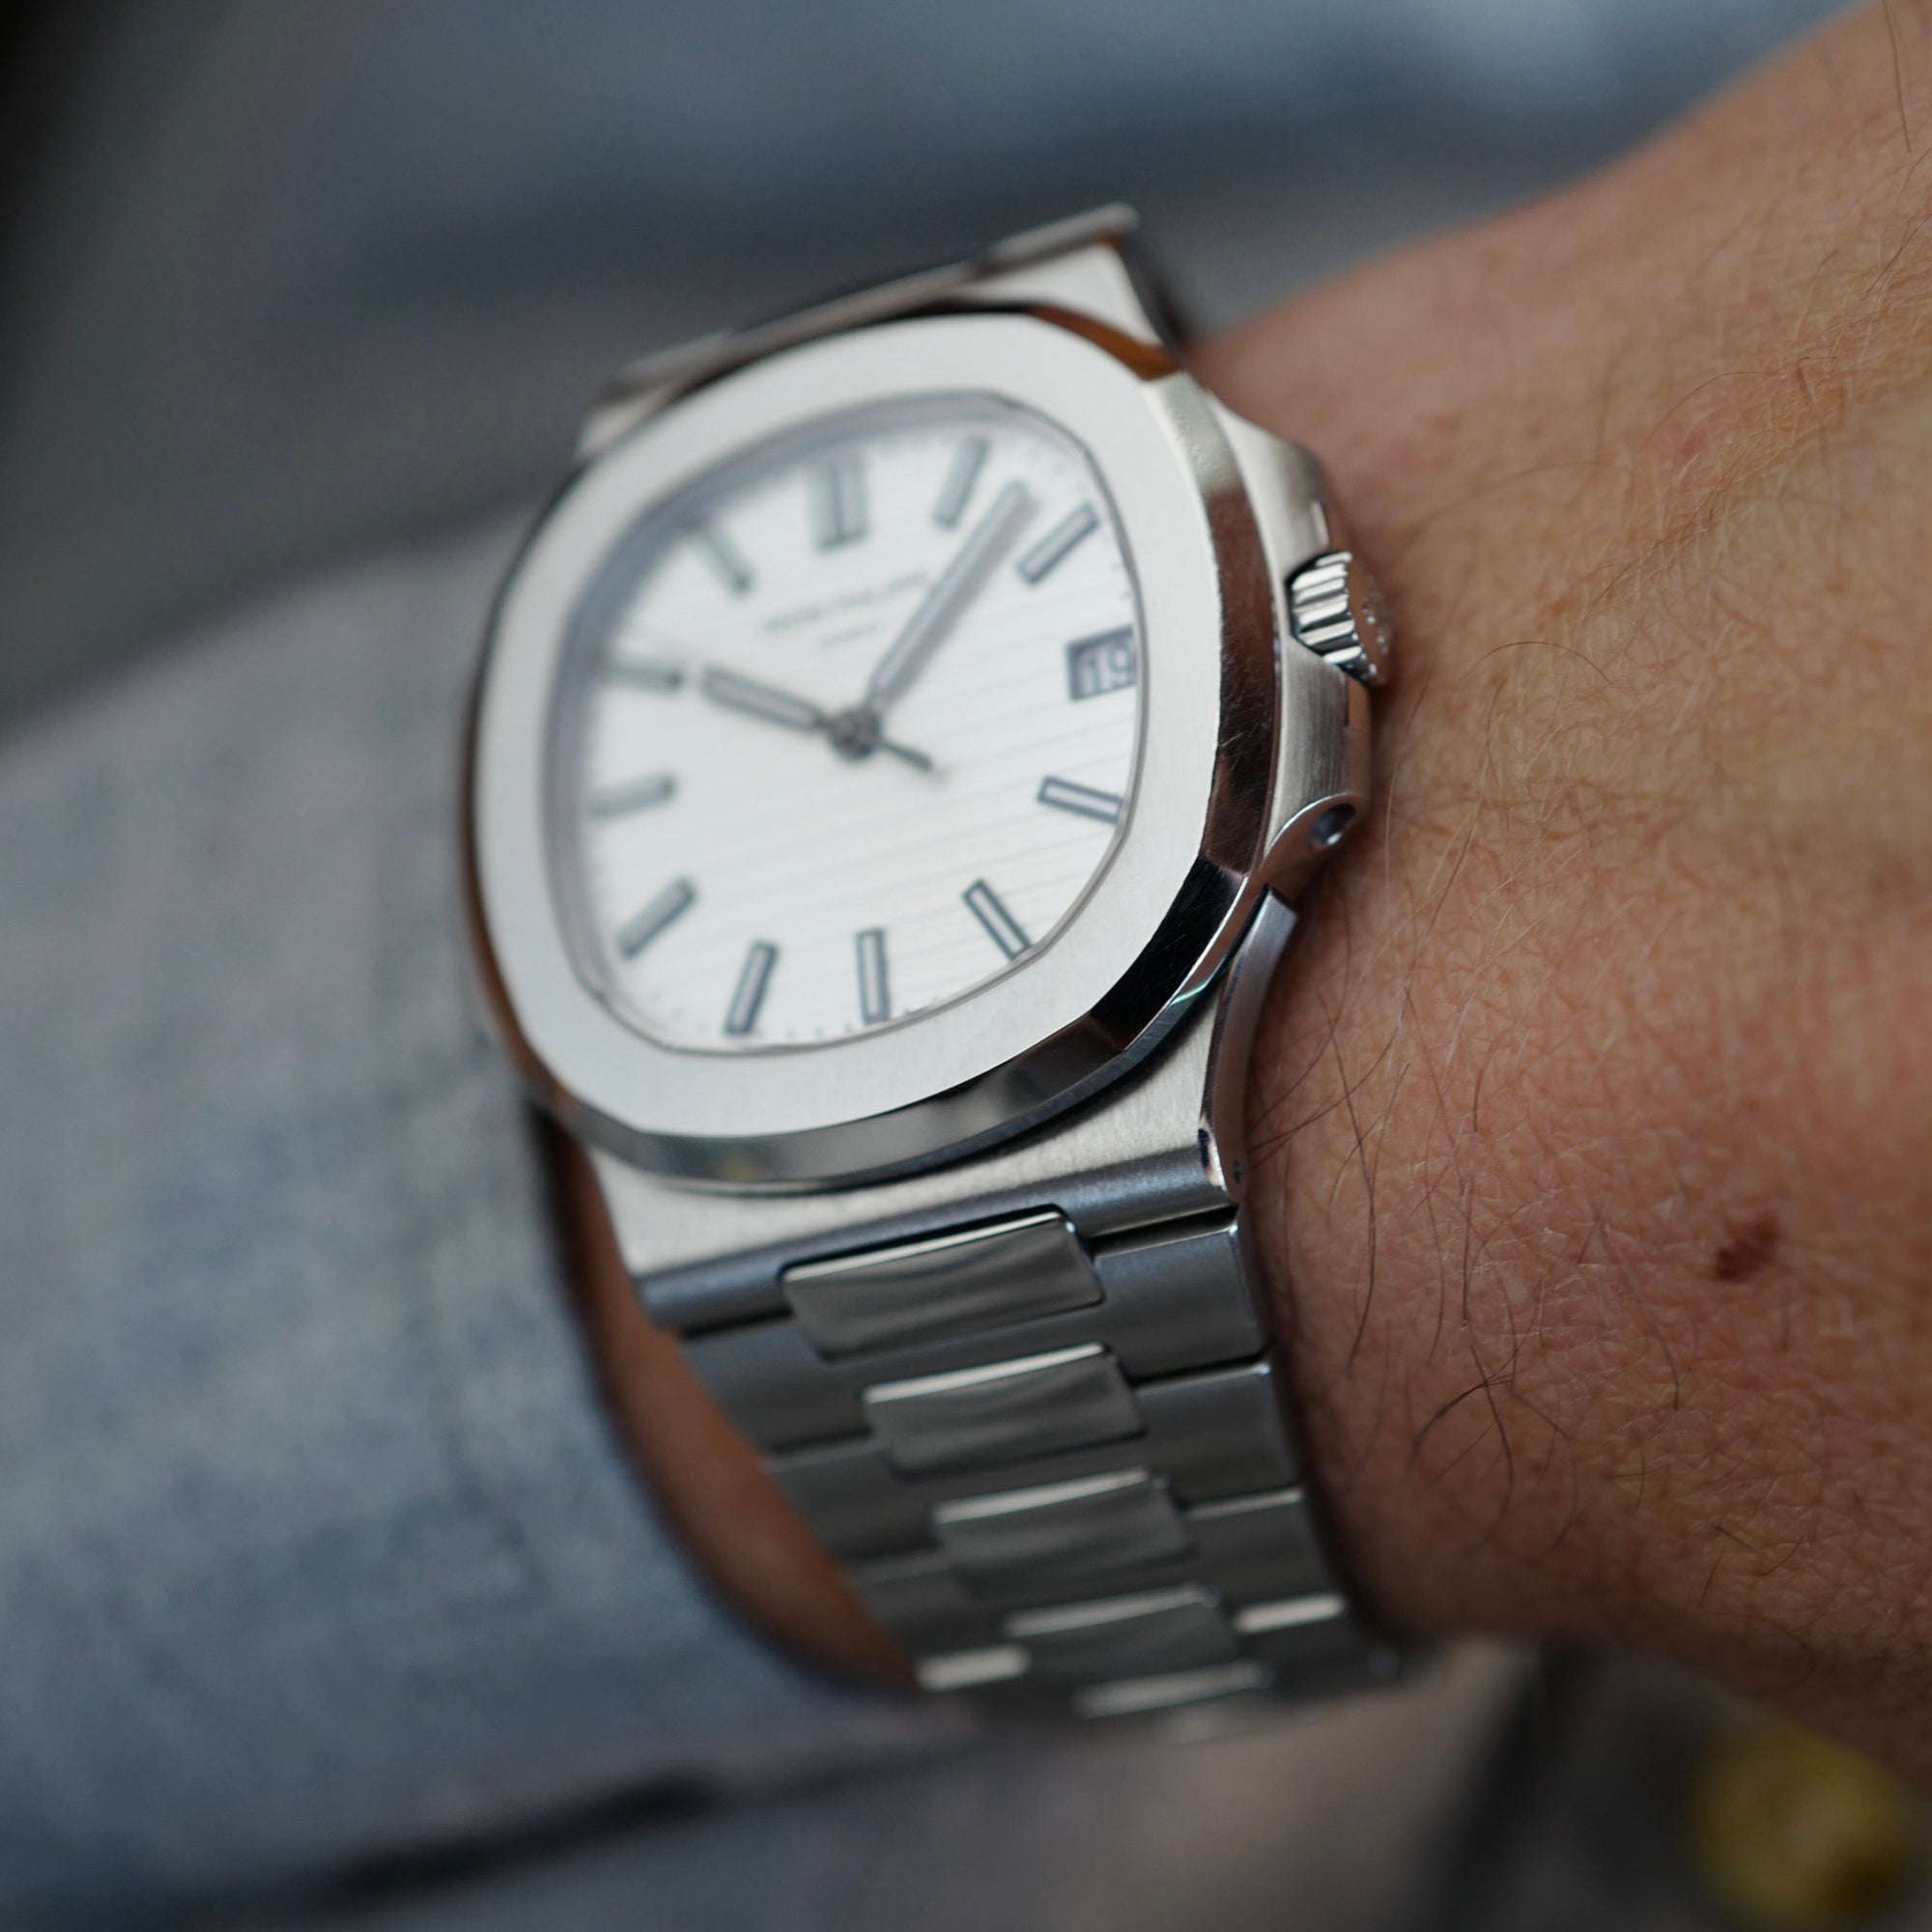 Patek Philippe - Patek Philippe Steel Nautilus Watch Ref. 5711 (NEW ARRIVAL) - The Keystone Watches